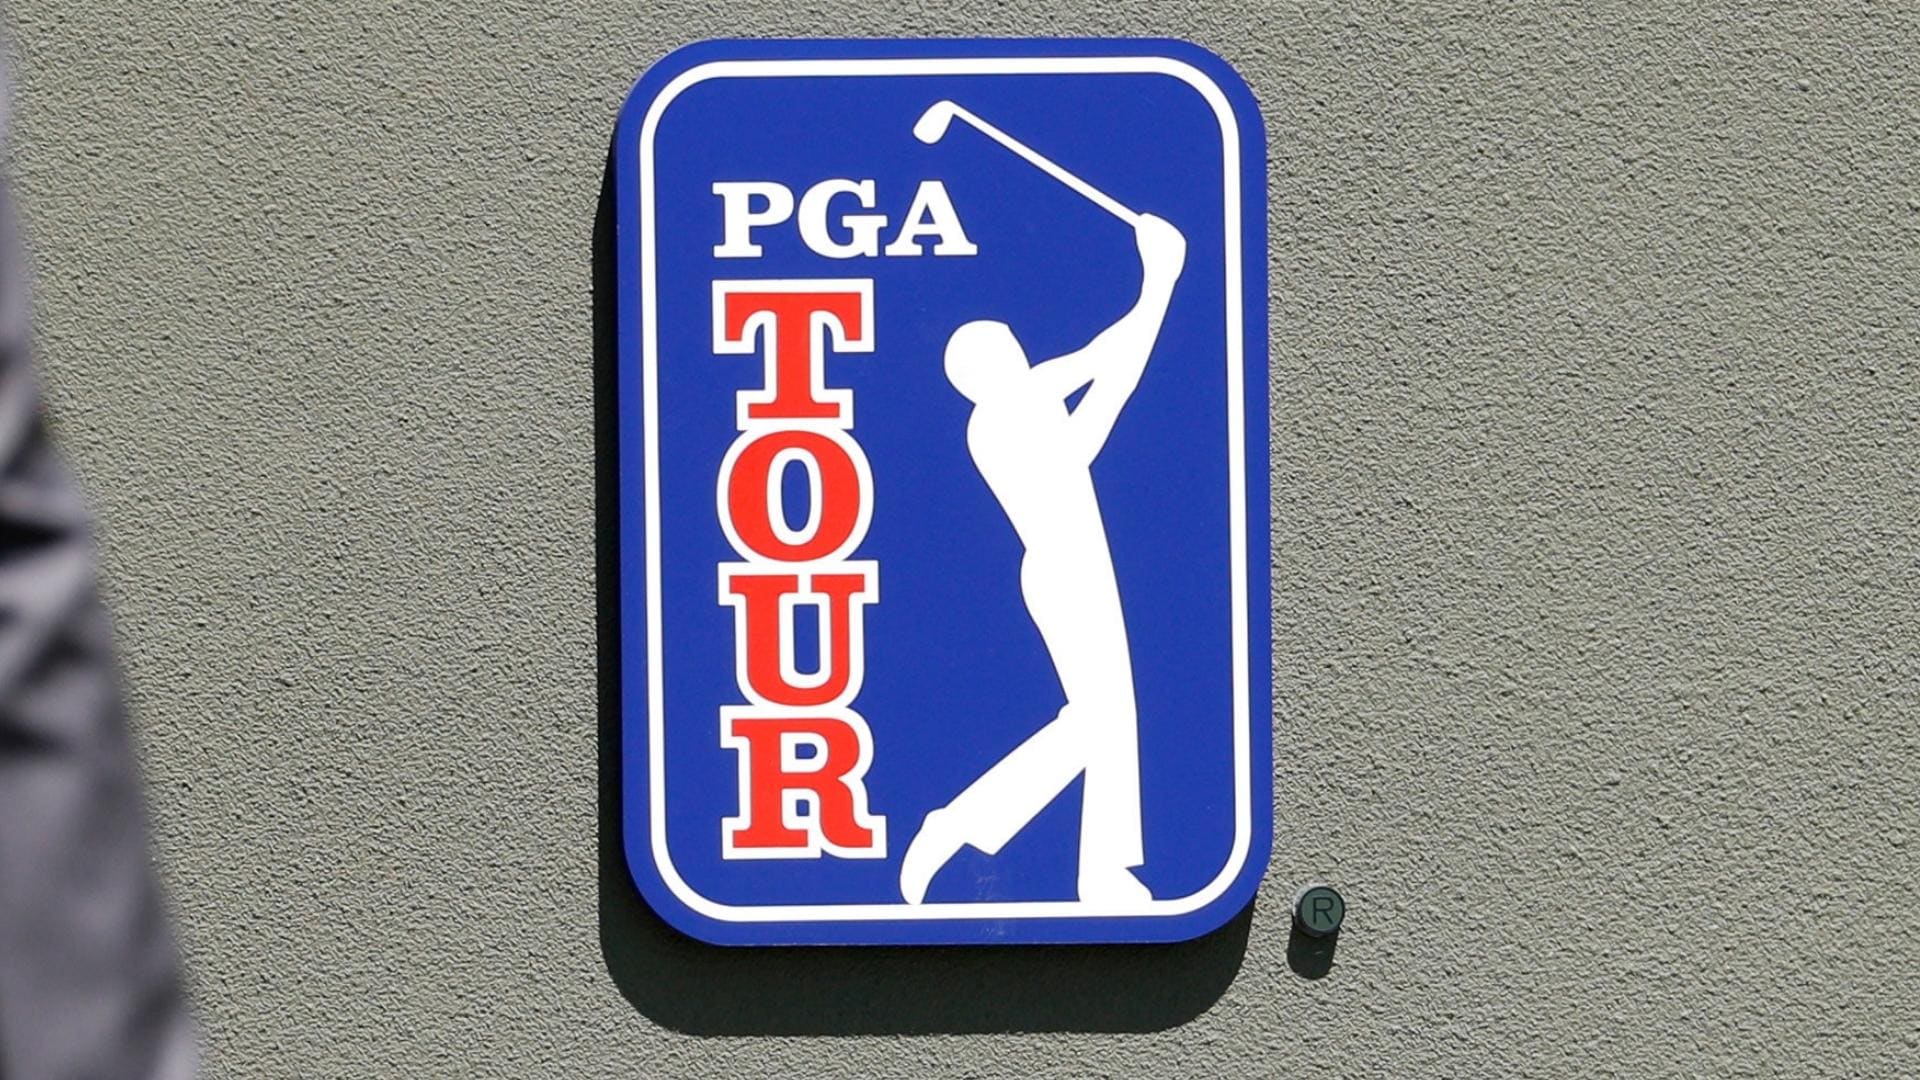 PGA Tour files lawsuit against LIV’s Saudi backers